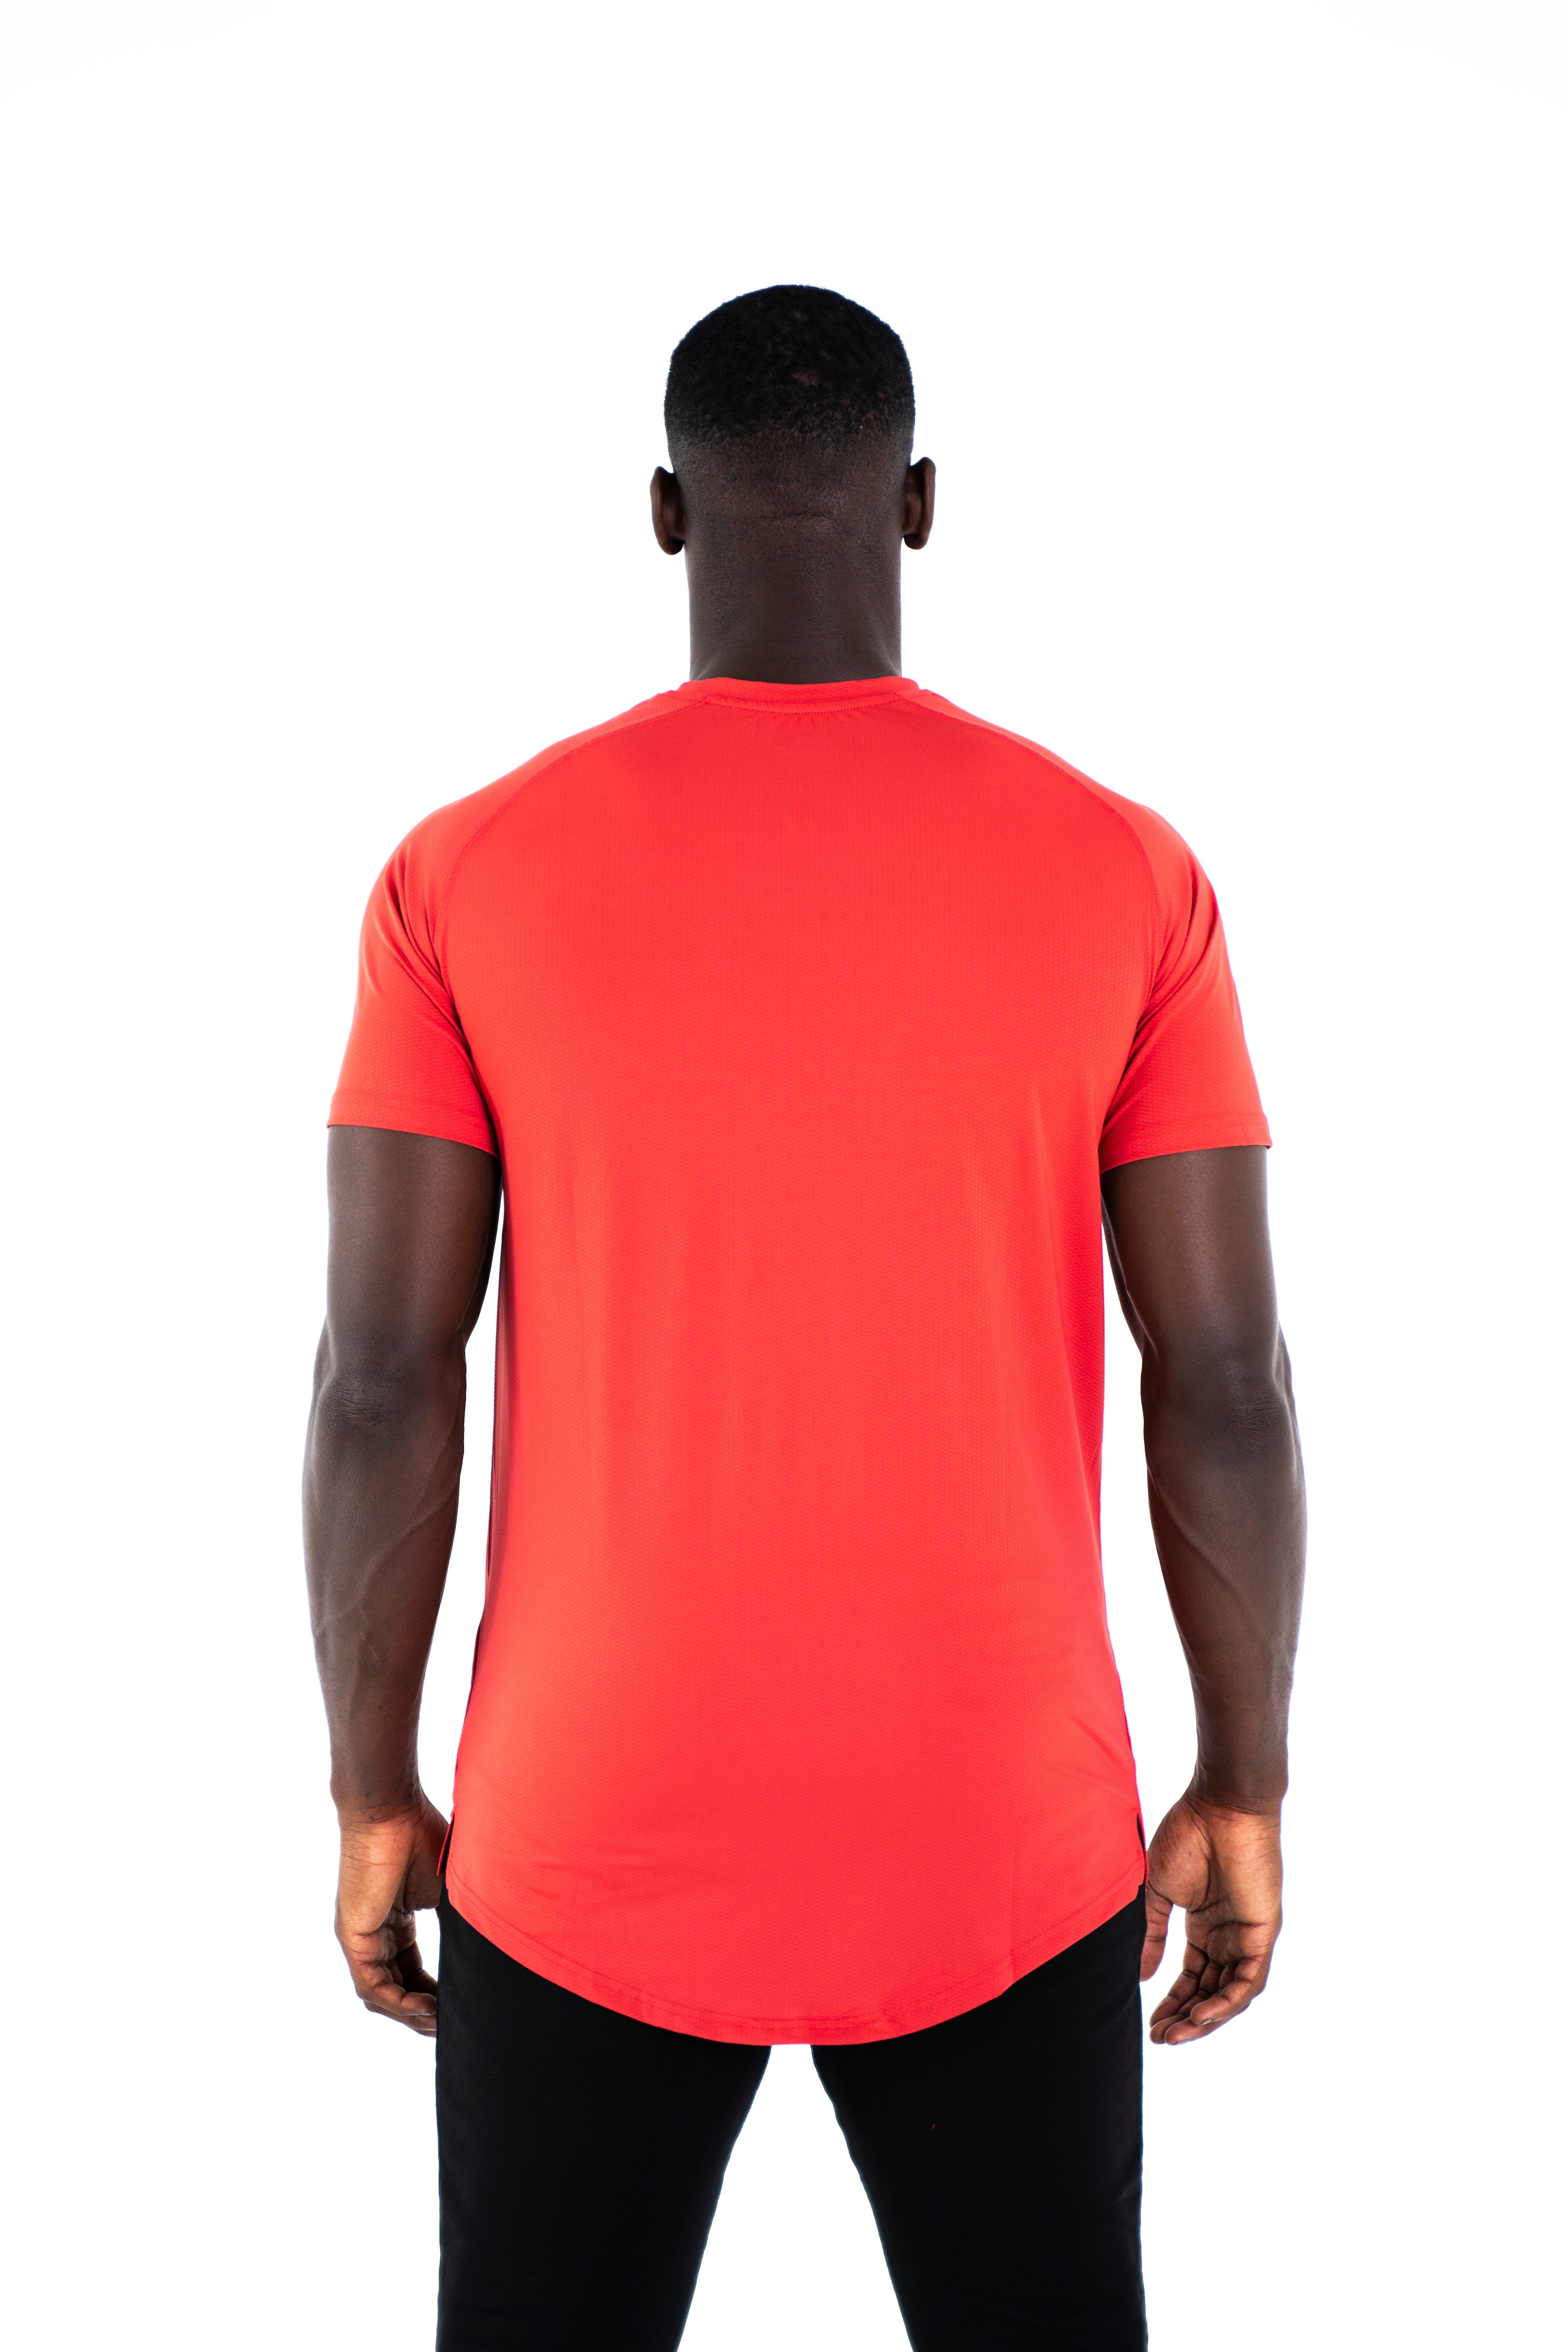 Universum Sportwear Funktionsshirt T-Shirt Sportlicher Schulterschnitt, rot und Saum Abgerundeter Figurbetont elastisch